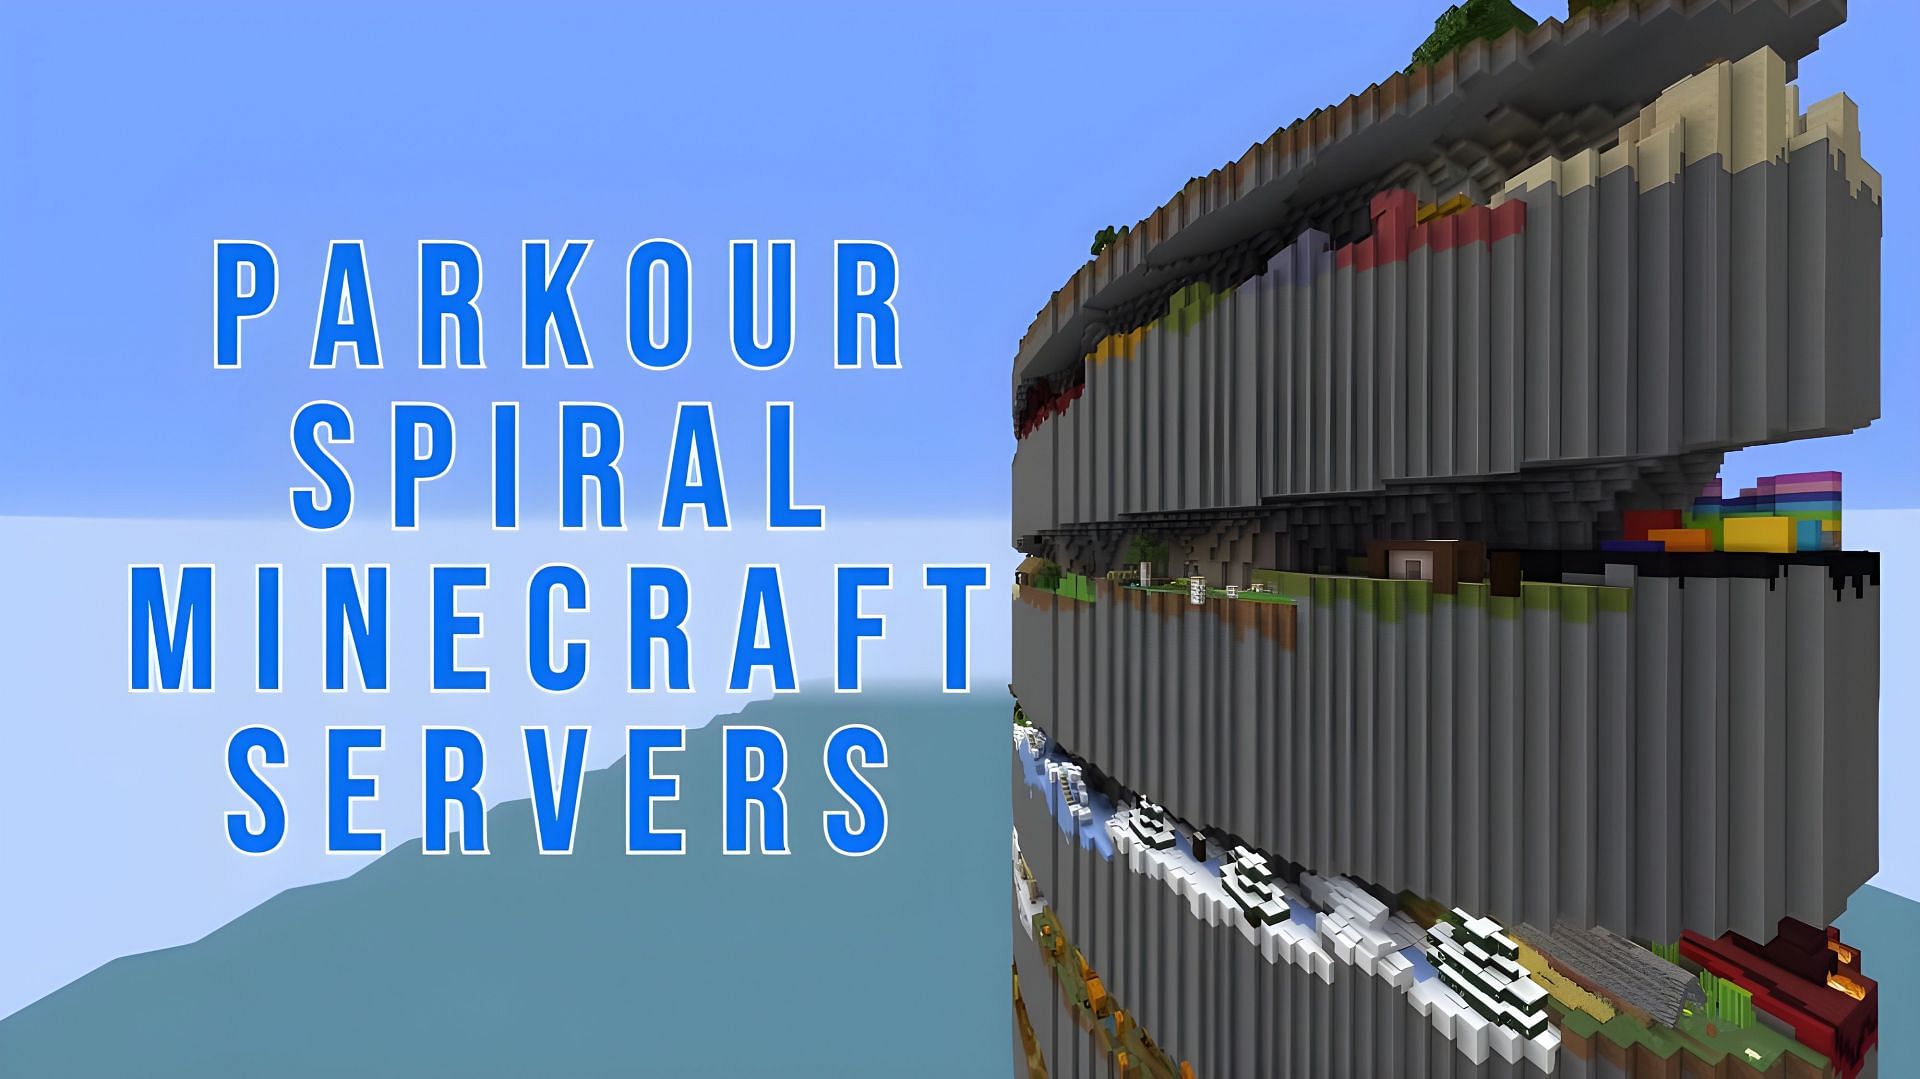 Parkour spiral Minecraft servers are extremely popular (Image via Mojang/Sportskeeda)